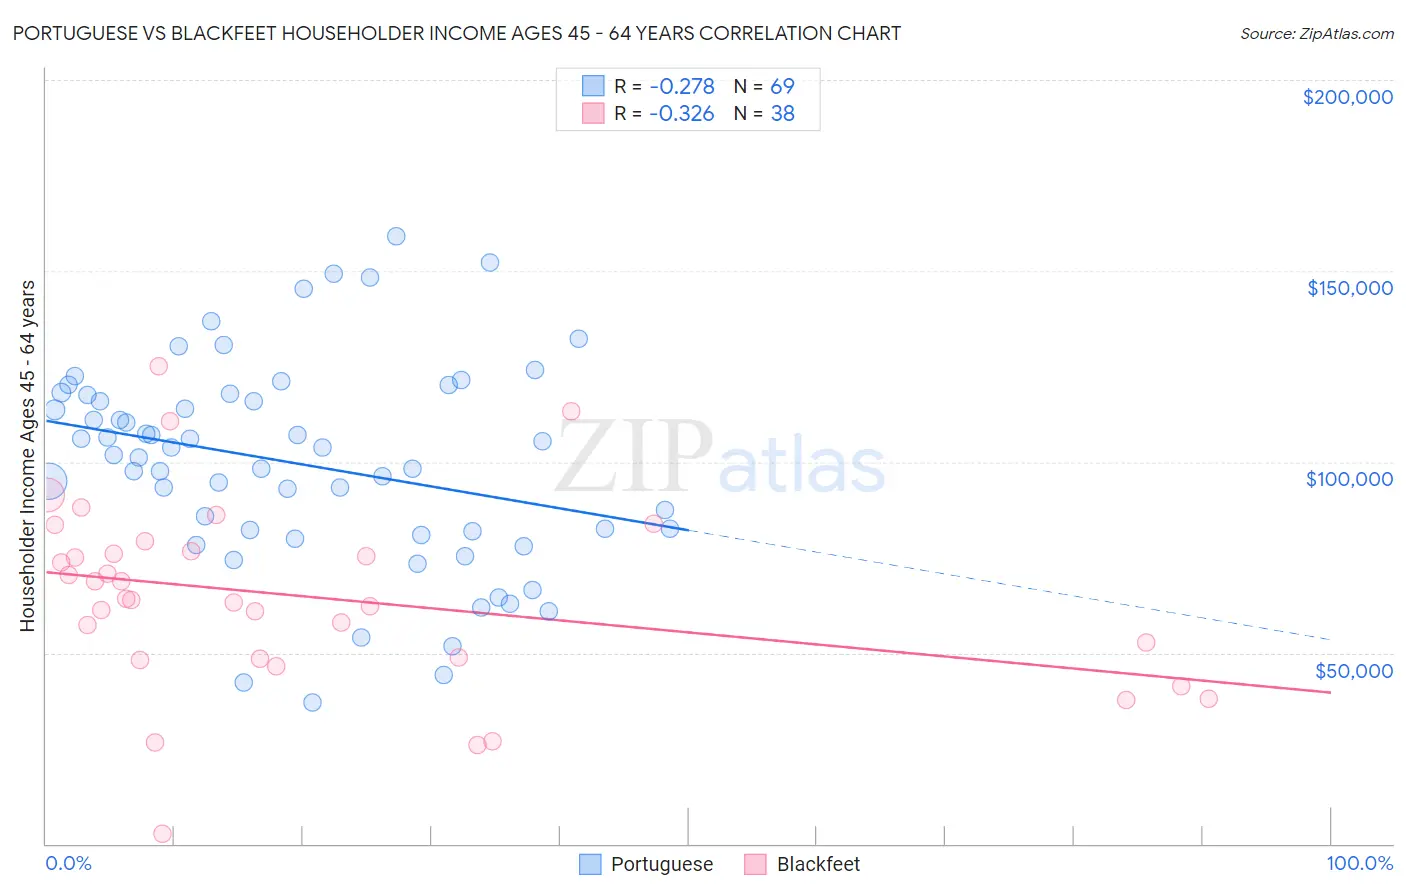 Portuguese vs Blackfeet Householder Income Ages 45 - 64 years